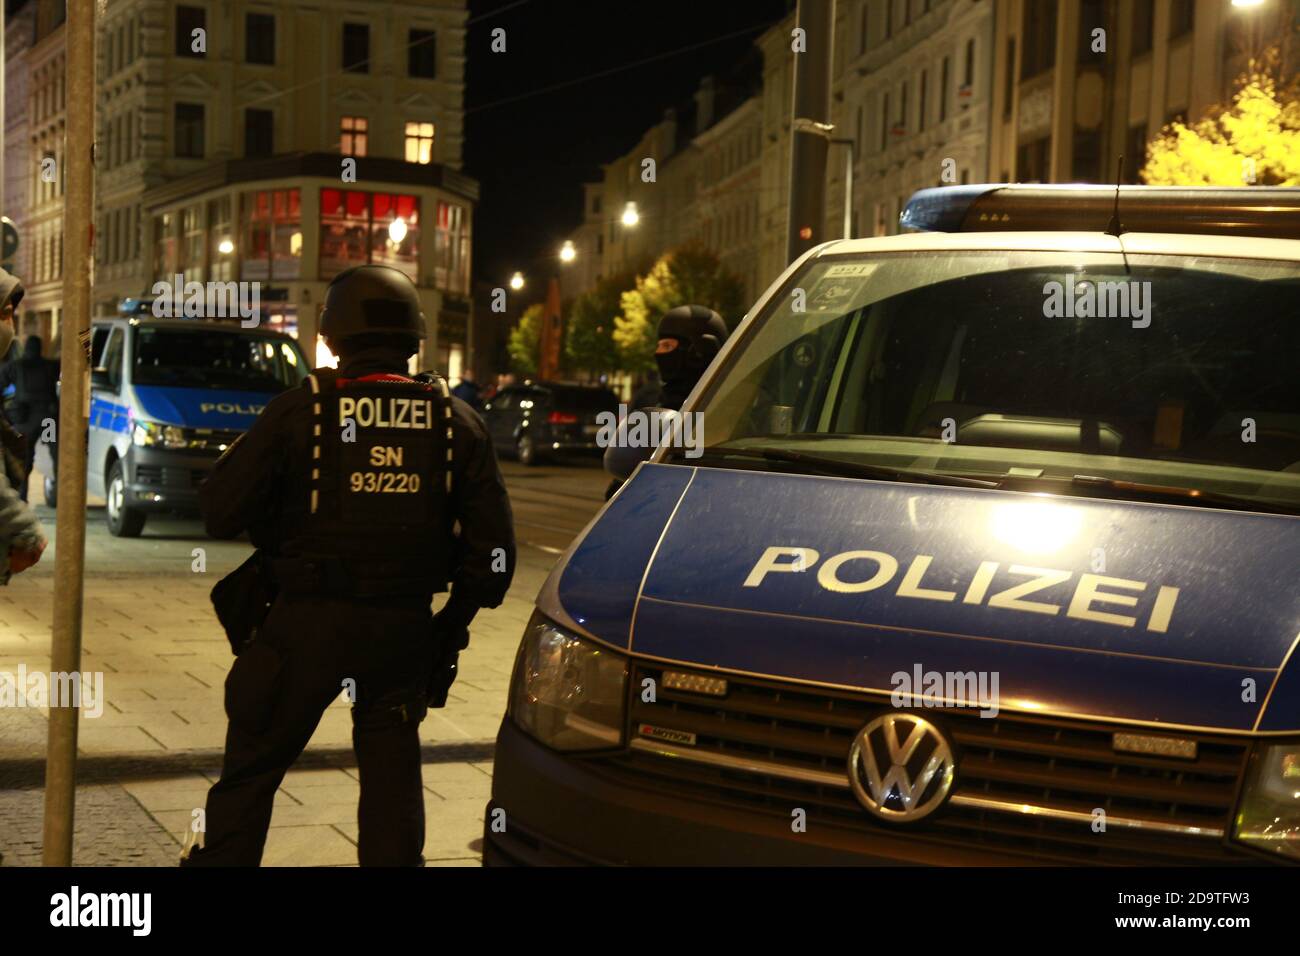 Polizei einsatzfahrzeug hi-res stock photography and images - Page 2 - Alamy